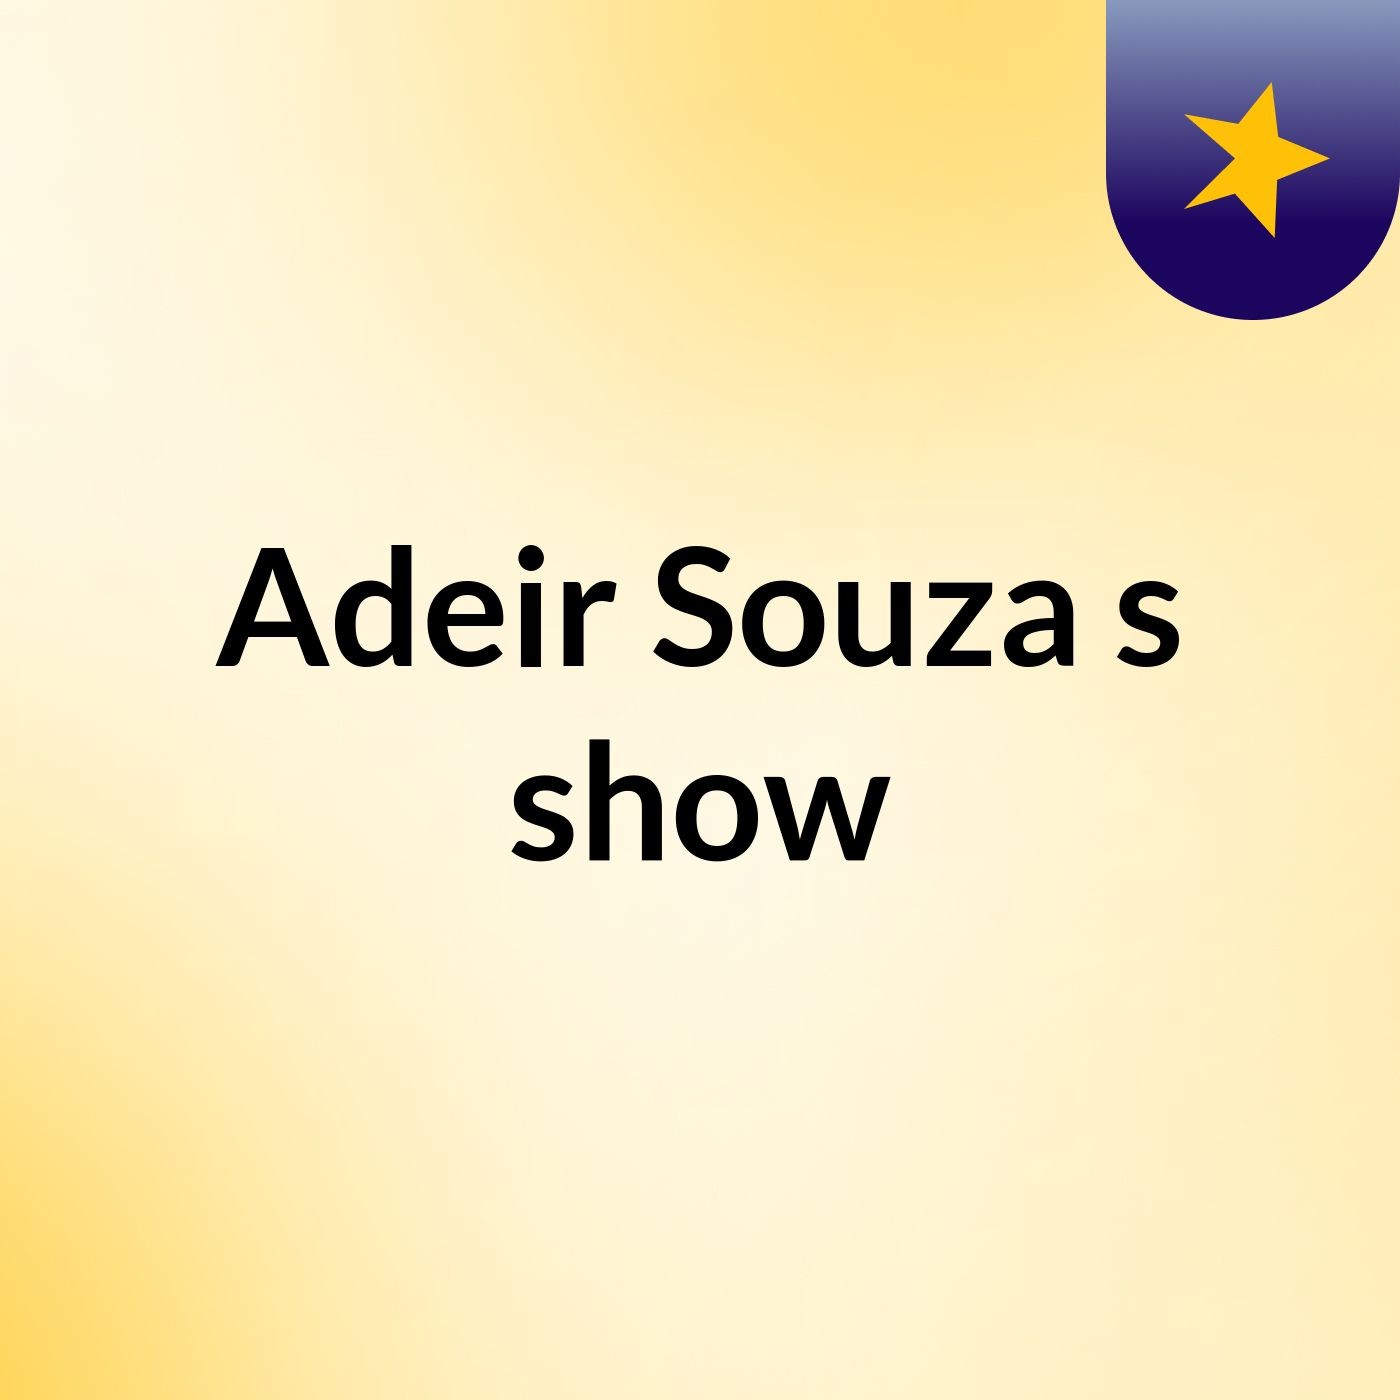 Adeir Souza's show